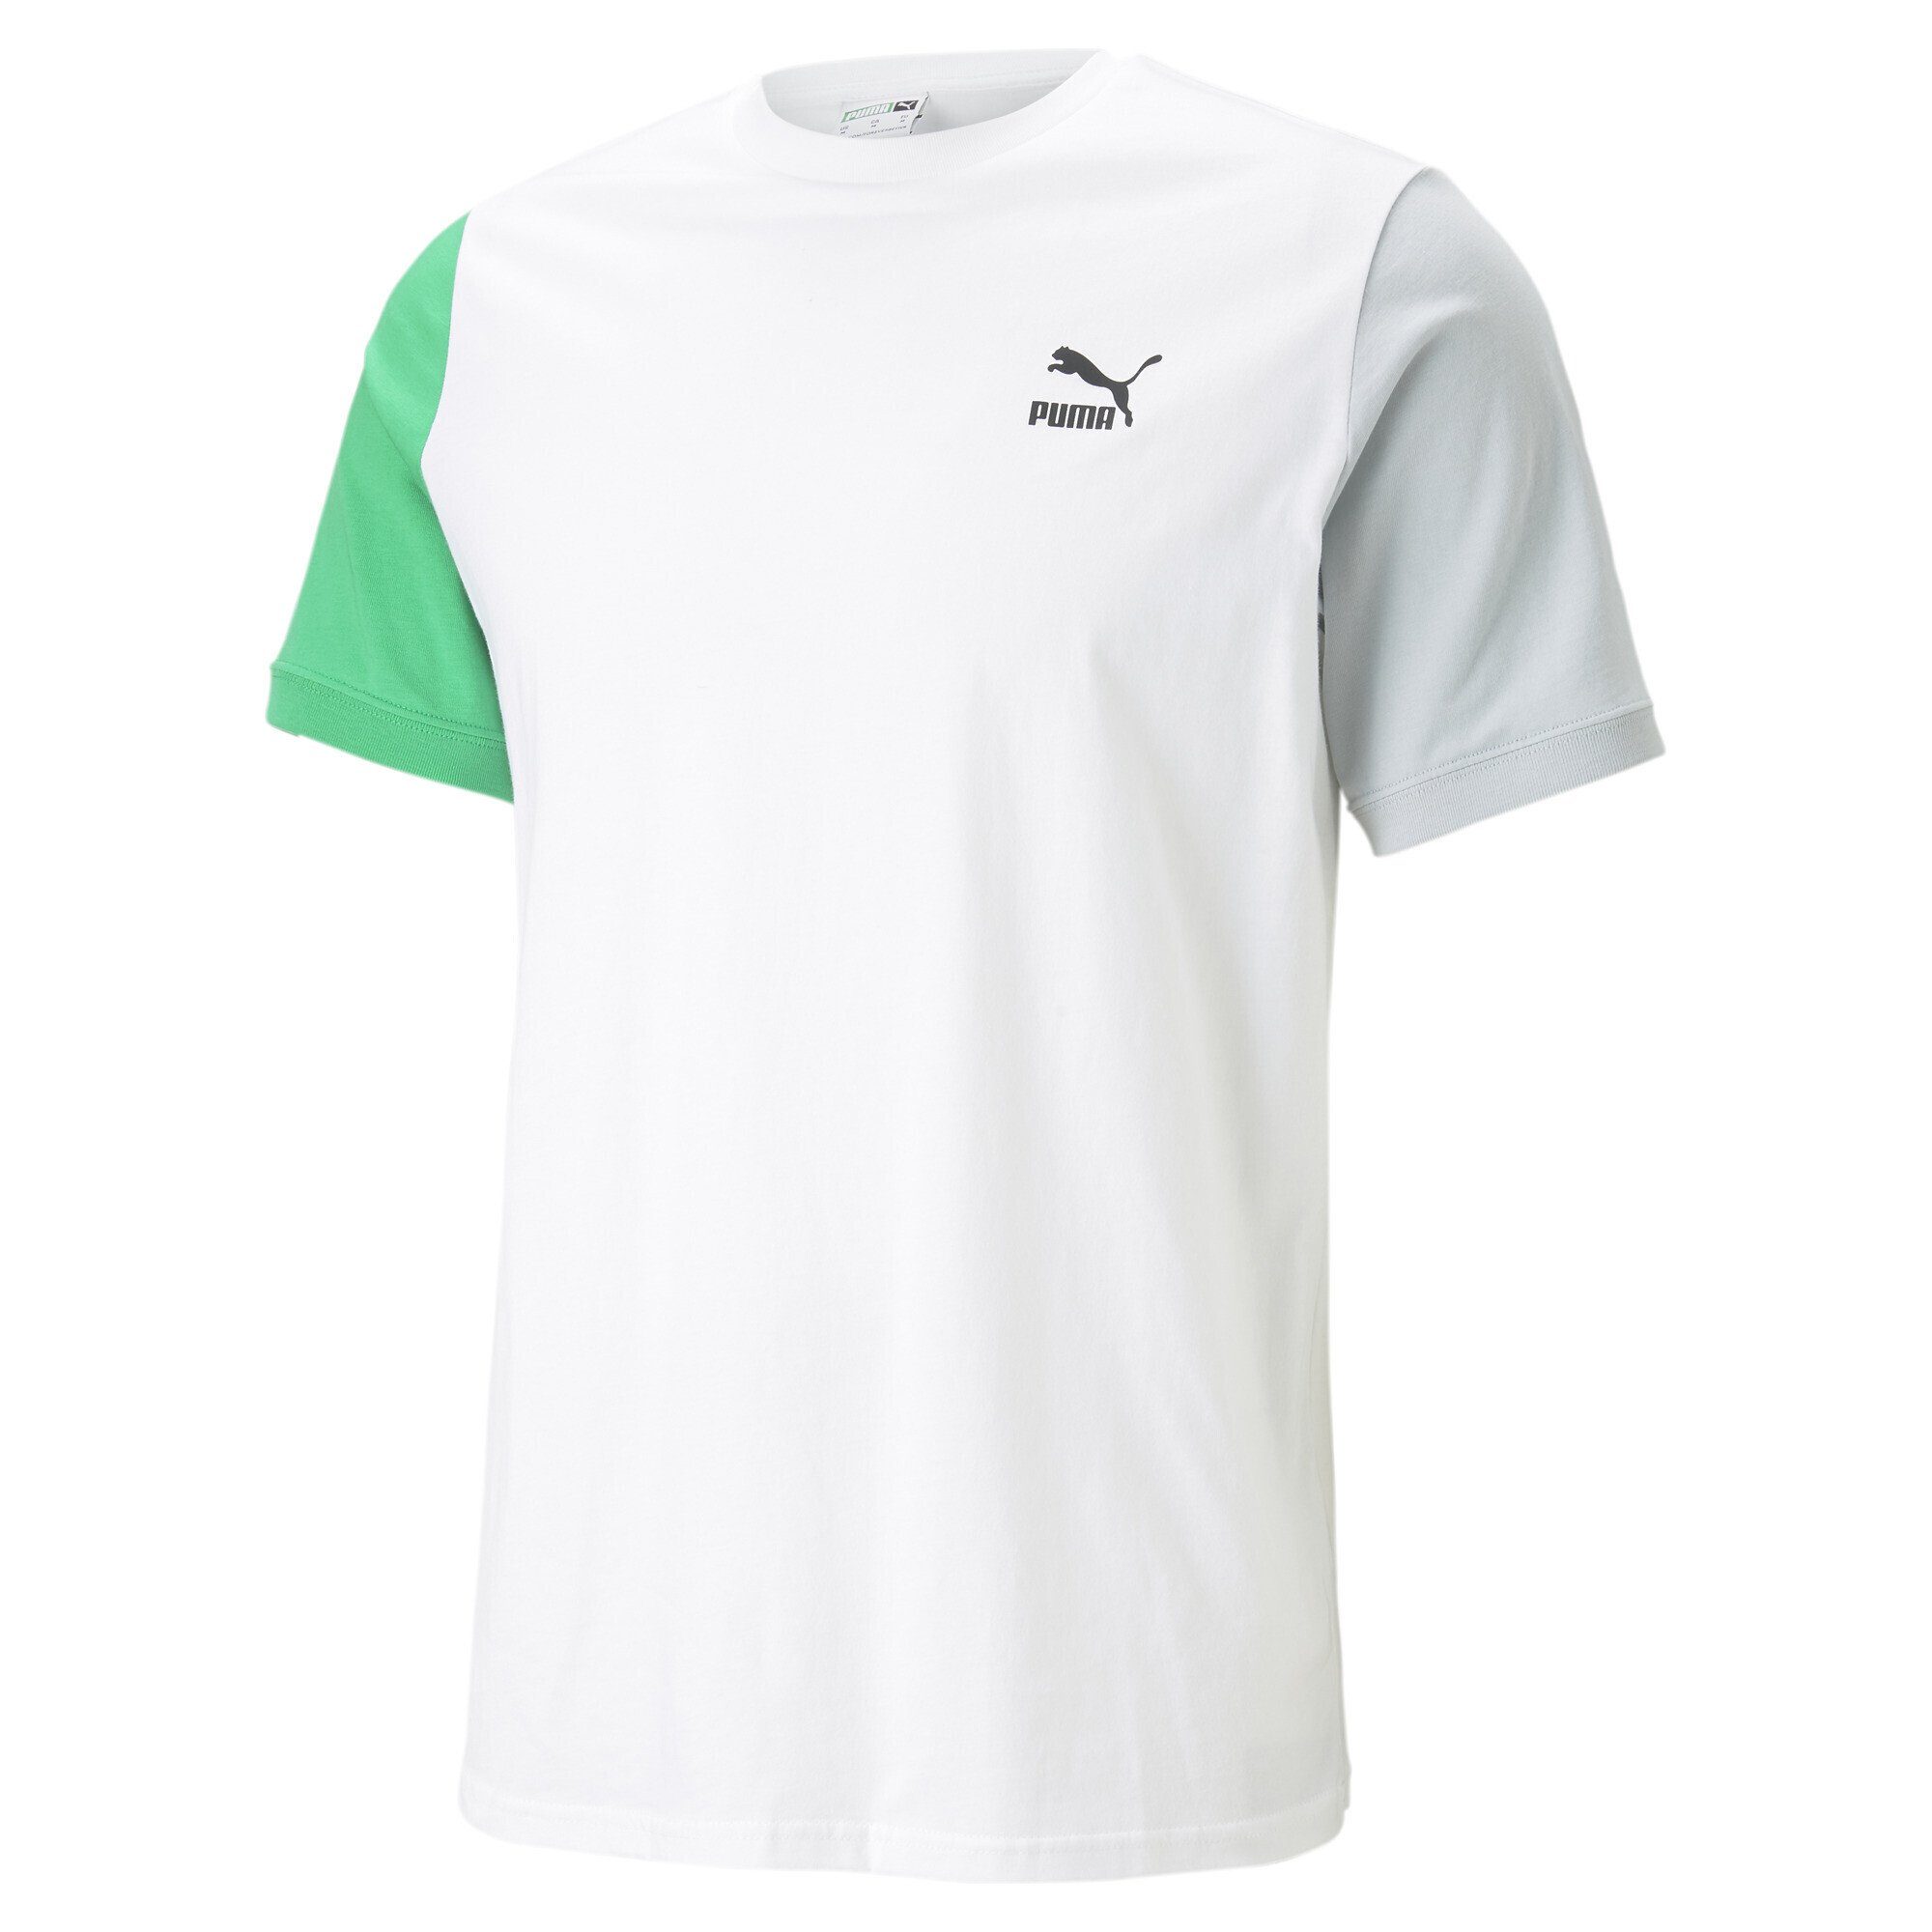 wird zum niedrigsten Preis verkauft! PUMA T-Shirt Classics Herren Block Gray T-Shirt White Platinum